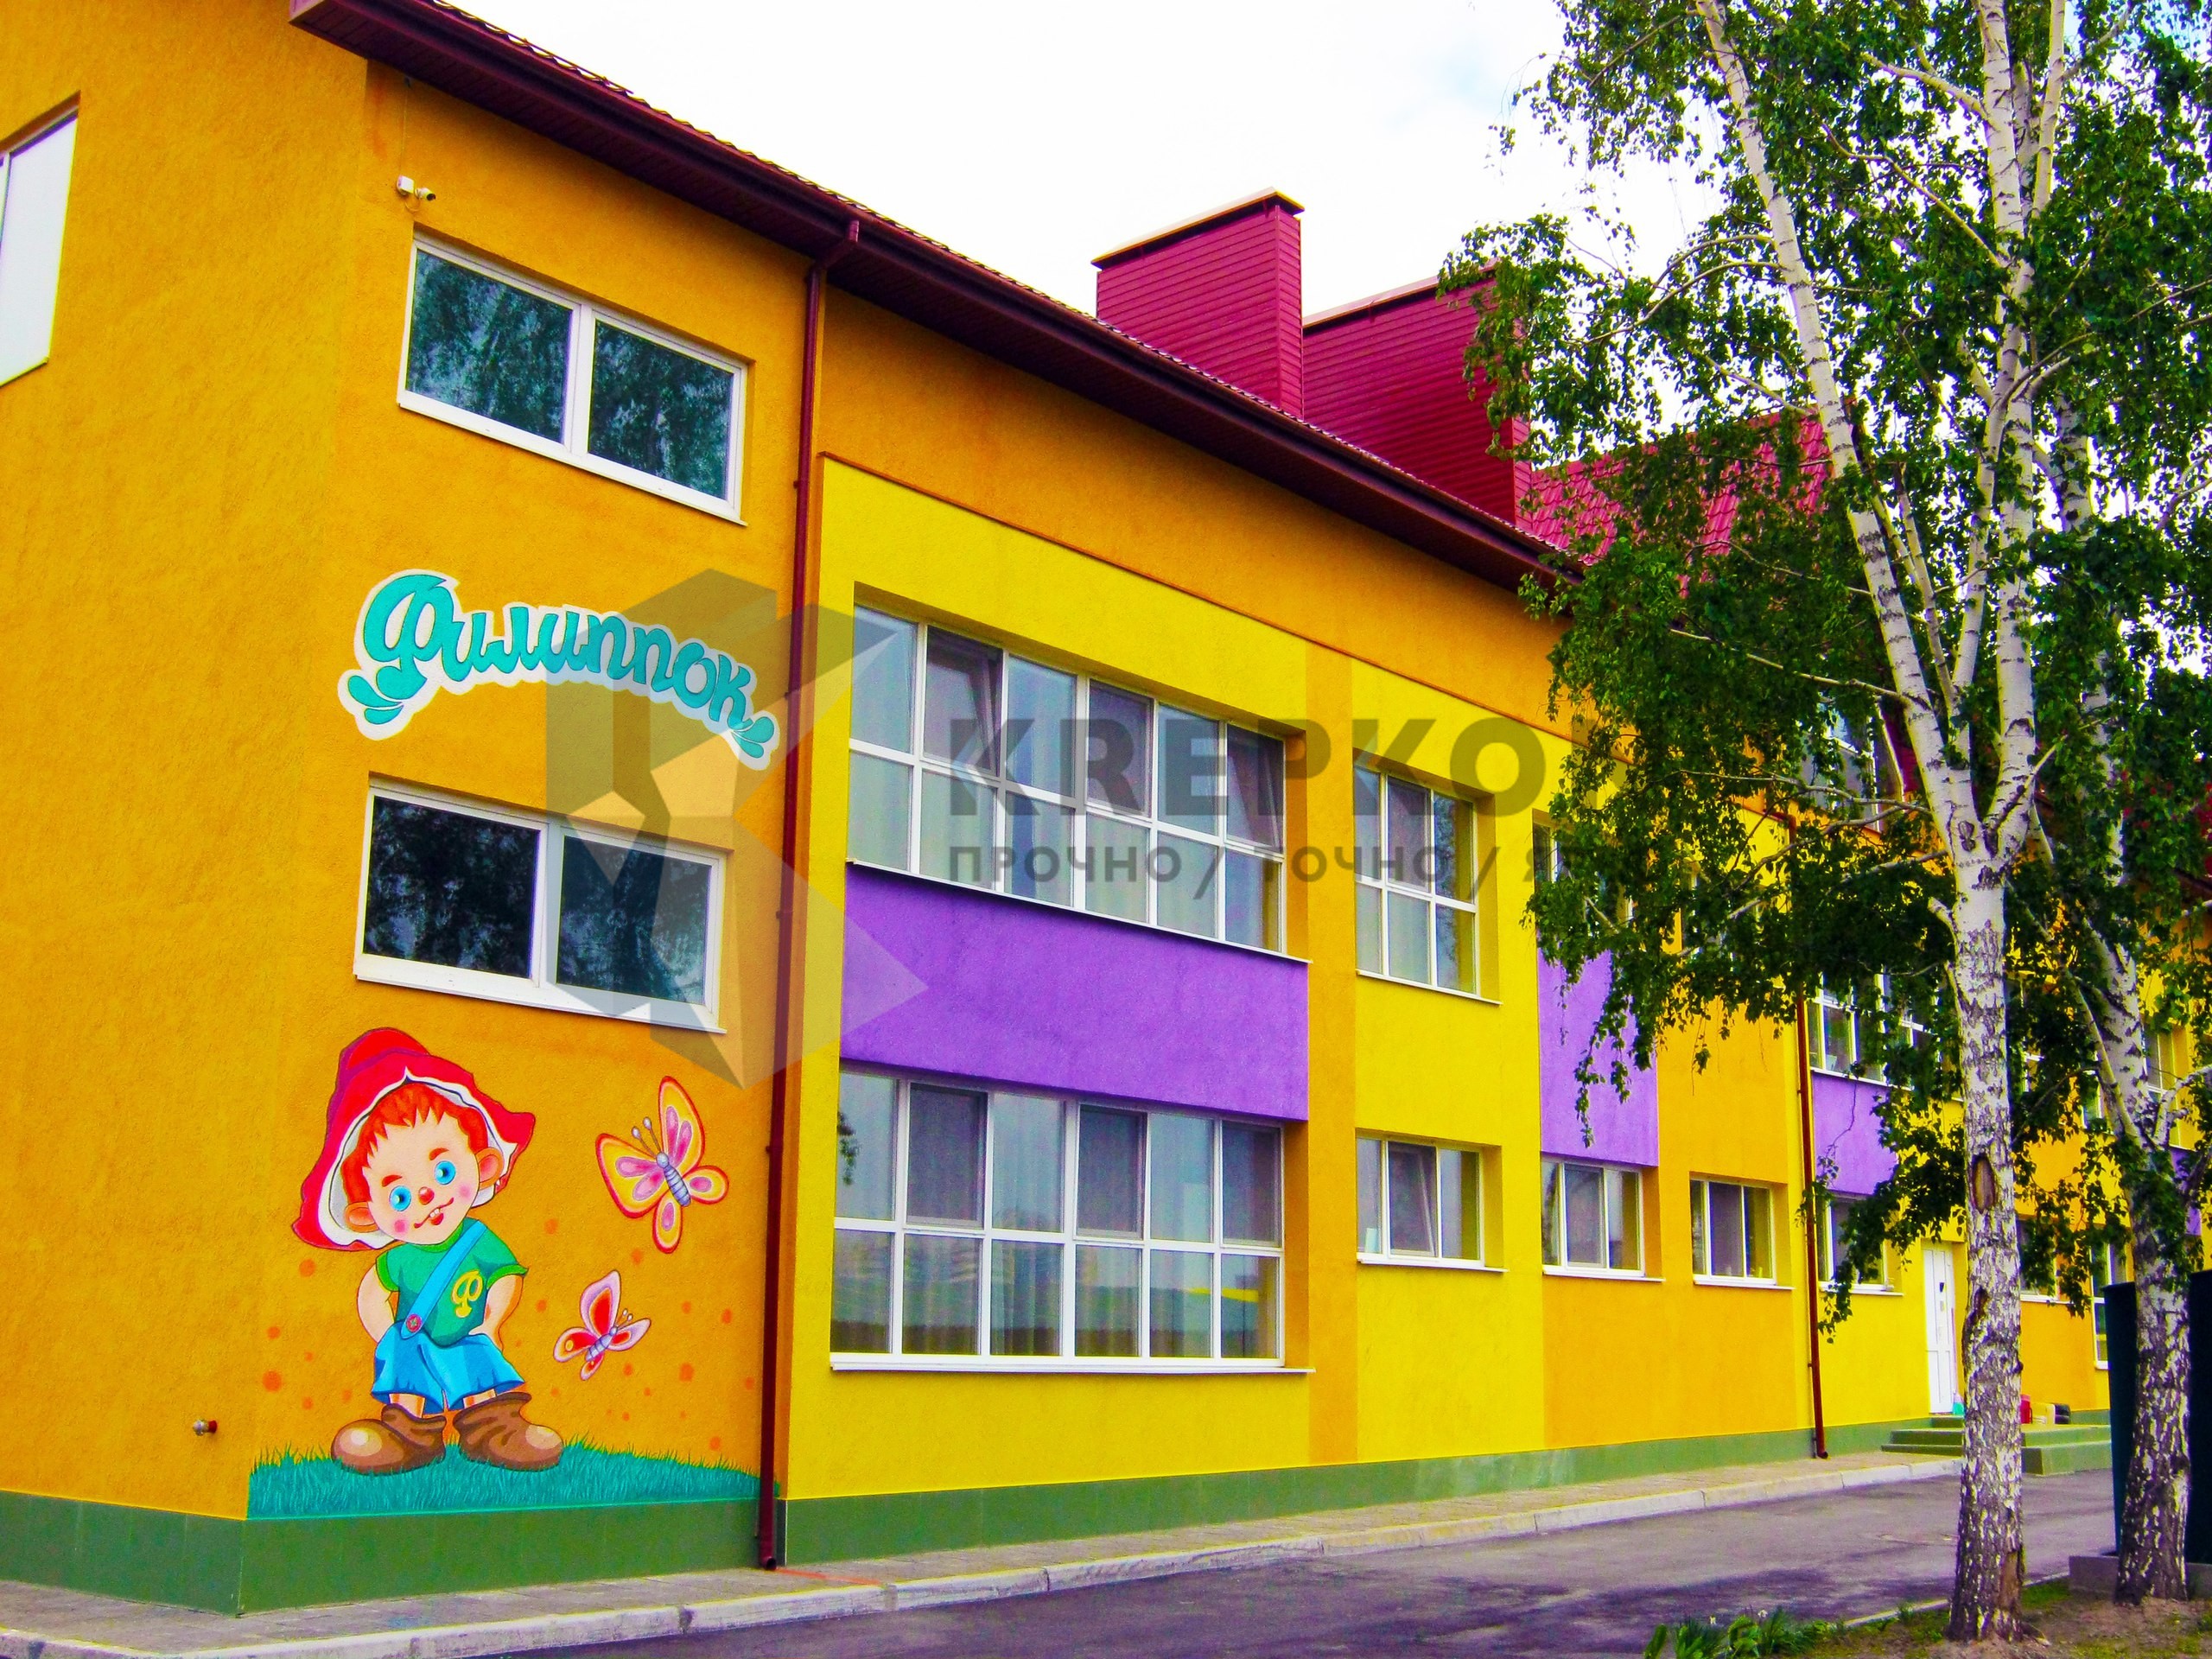 Садик полное название. Детский сад фасад. Фасад здания детского сада. Детский сад здание. Цветной фасад детского сада.